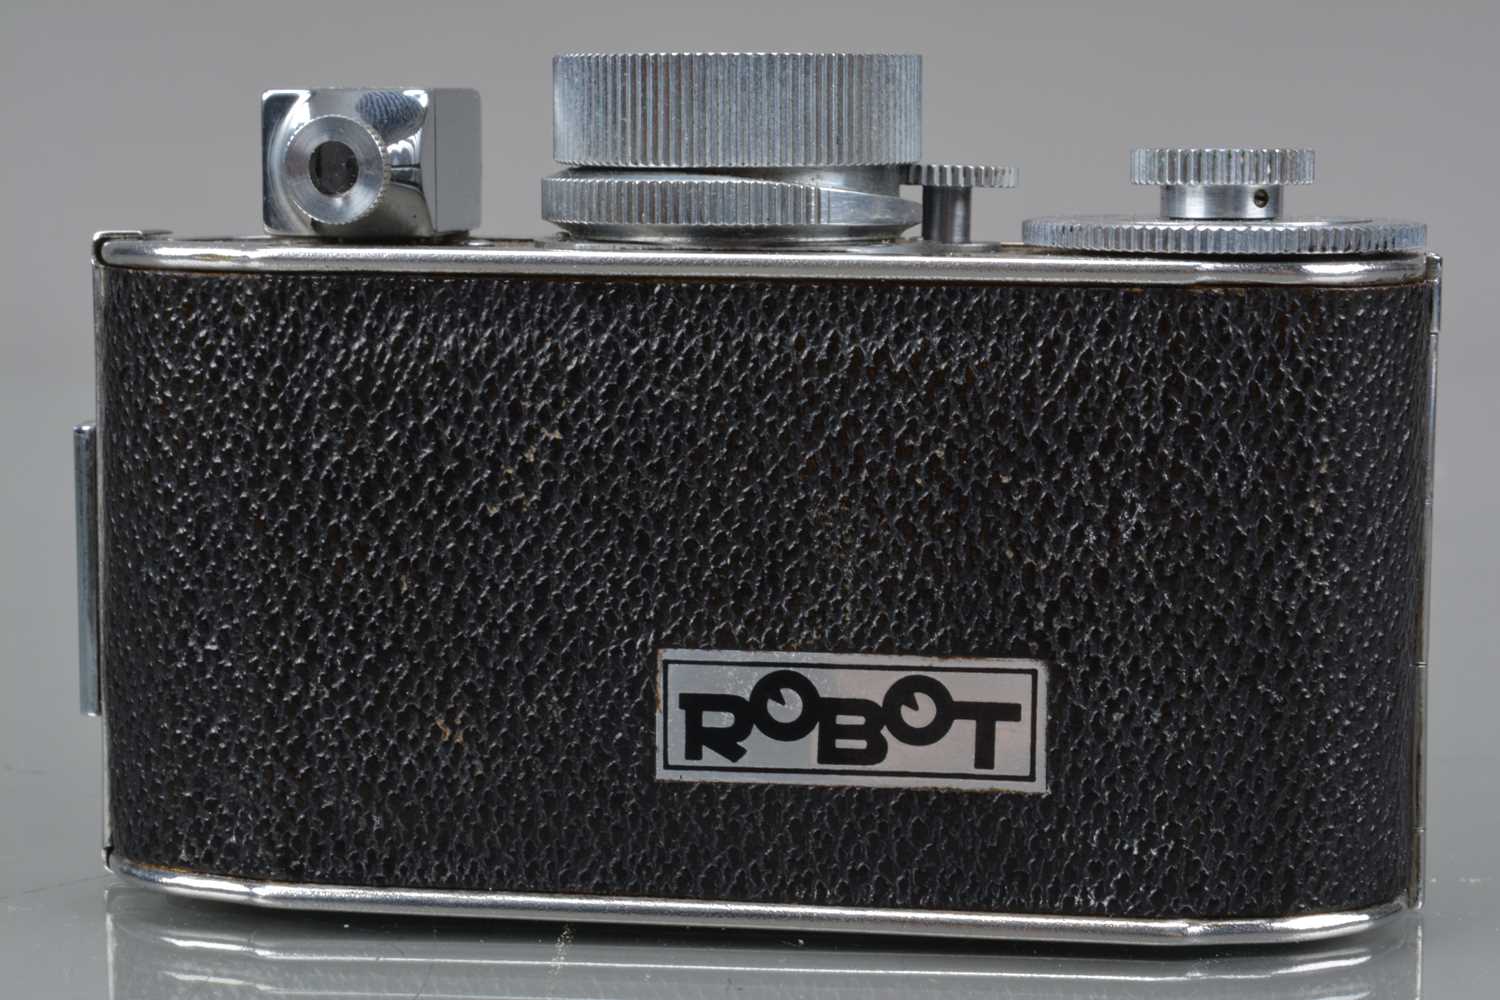 A Robot I Camera, - Image 2 of 3